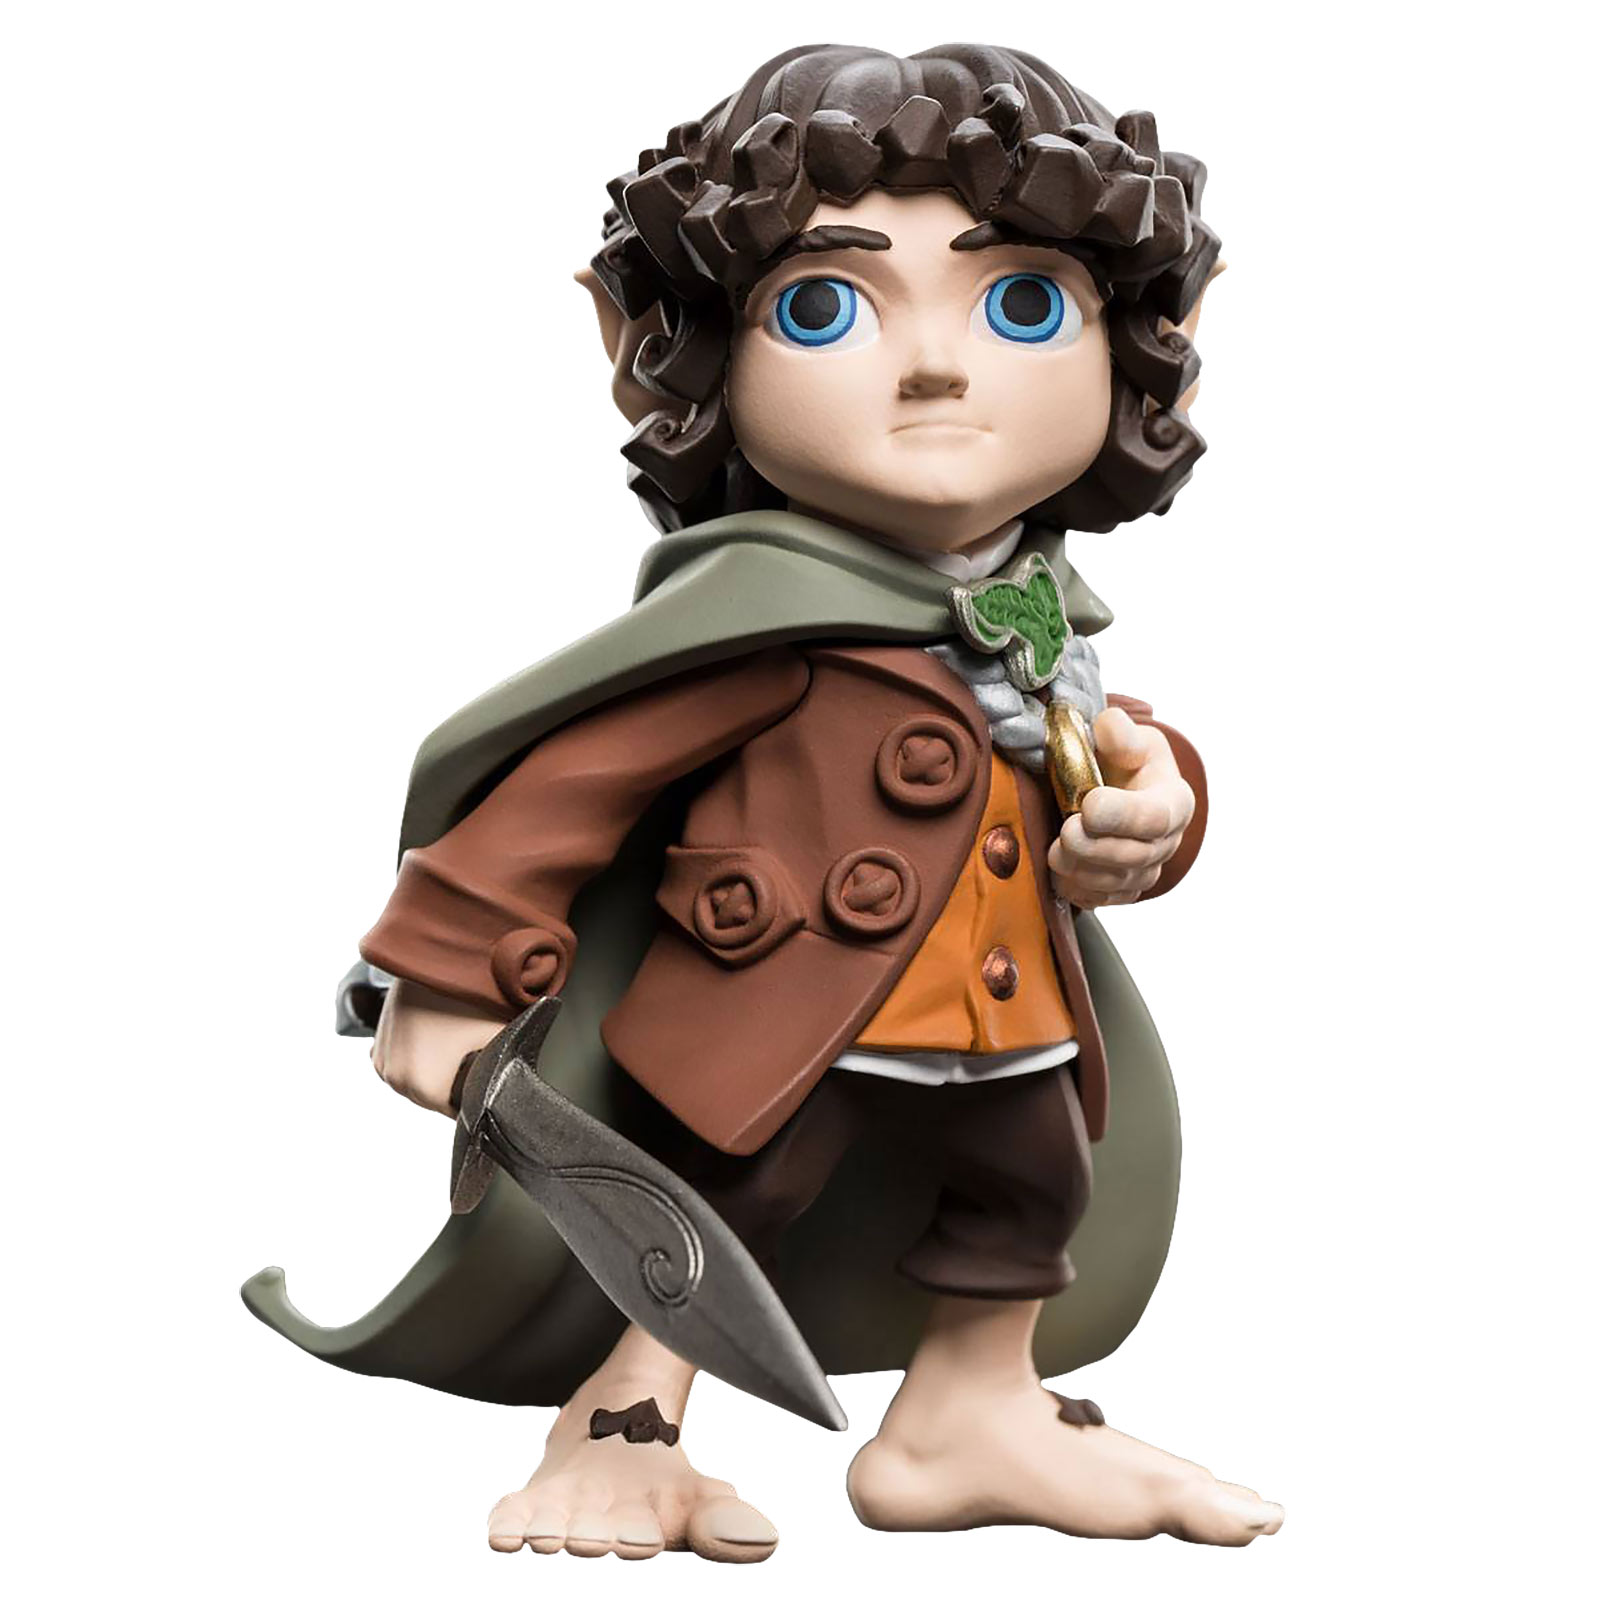 Herr der Ringe - Frodo Mini Epics Figur